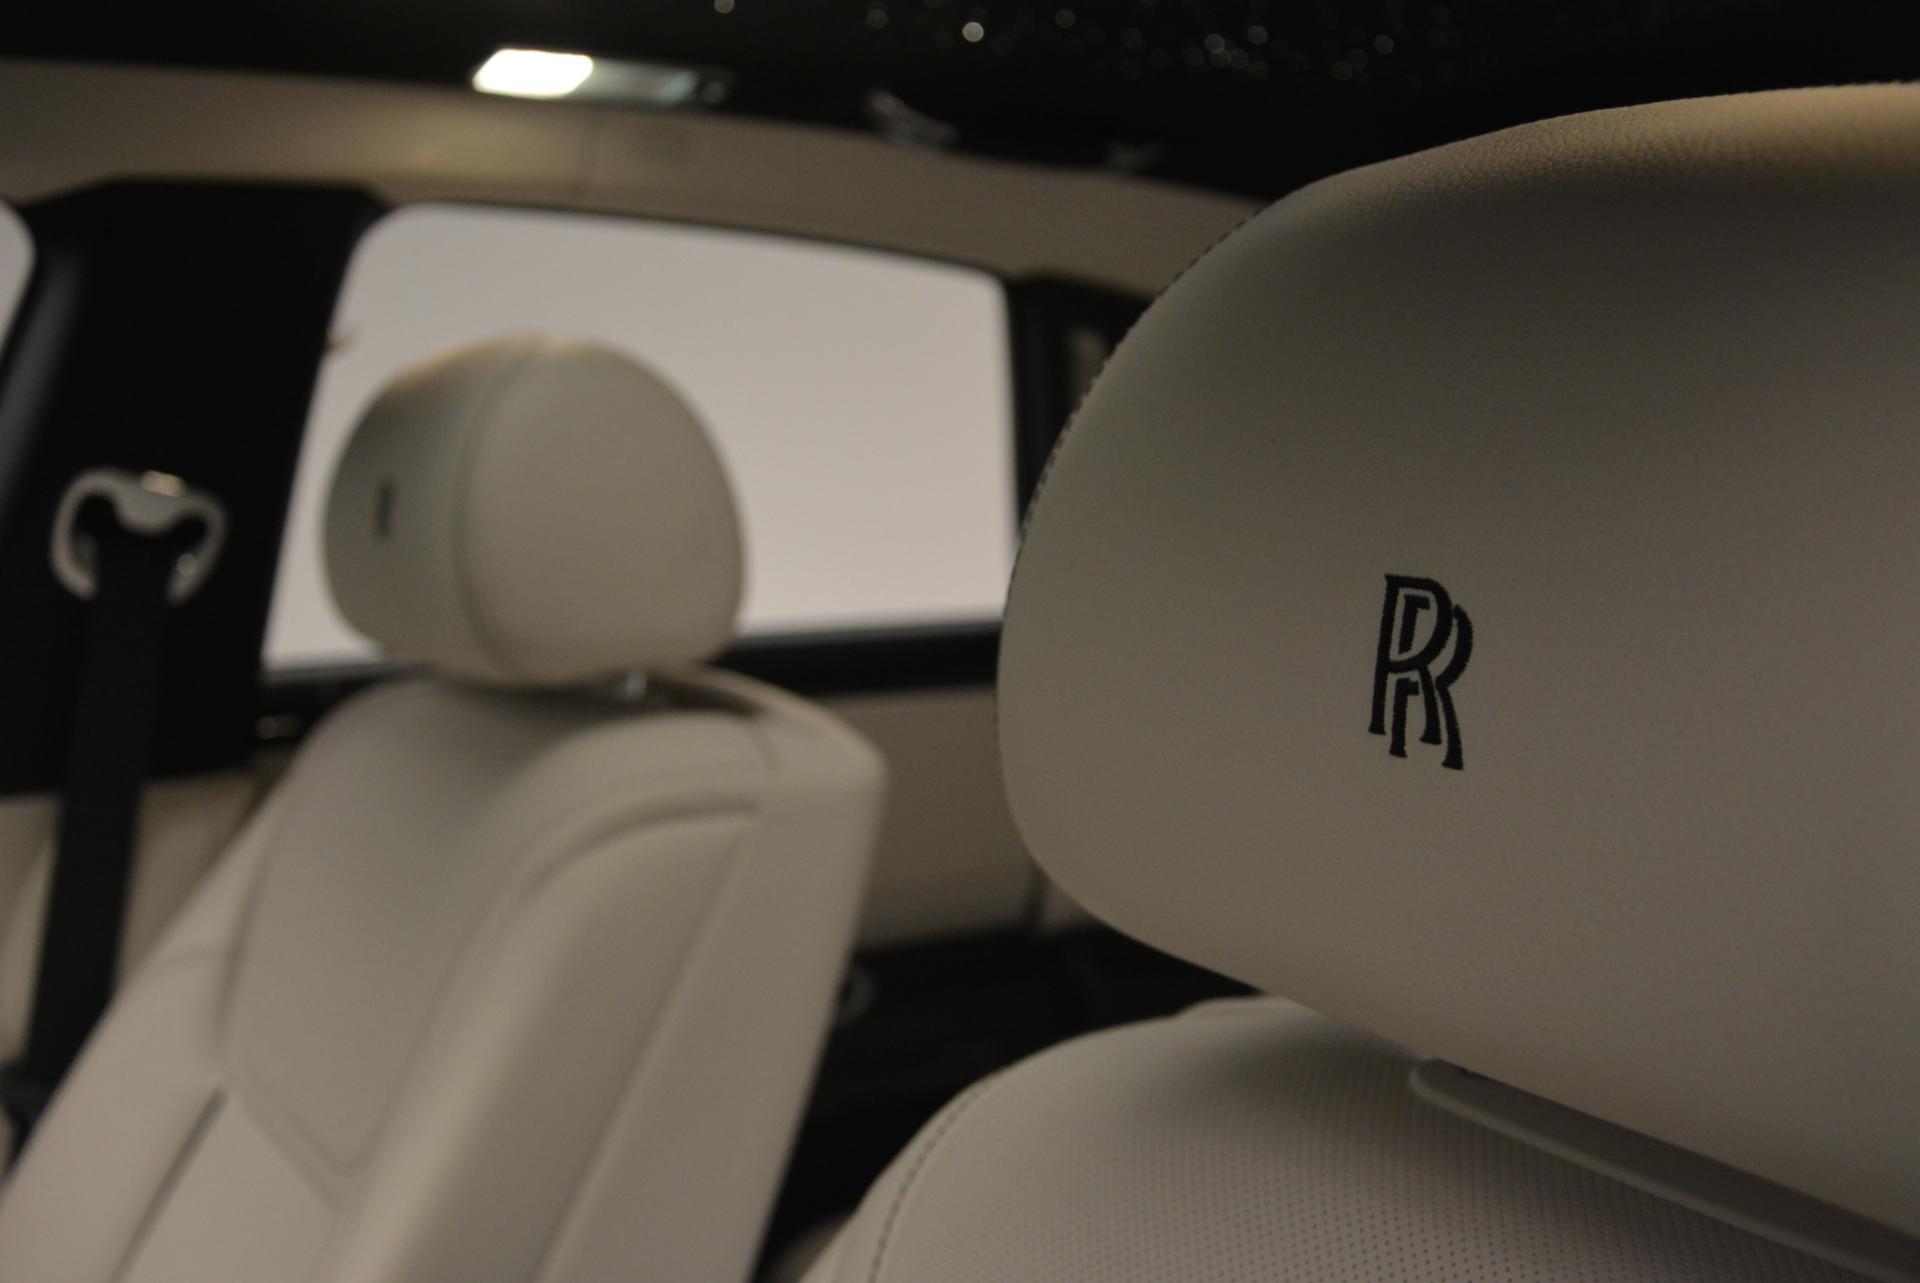 Used 2016 Rolls Royce Ghost